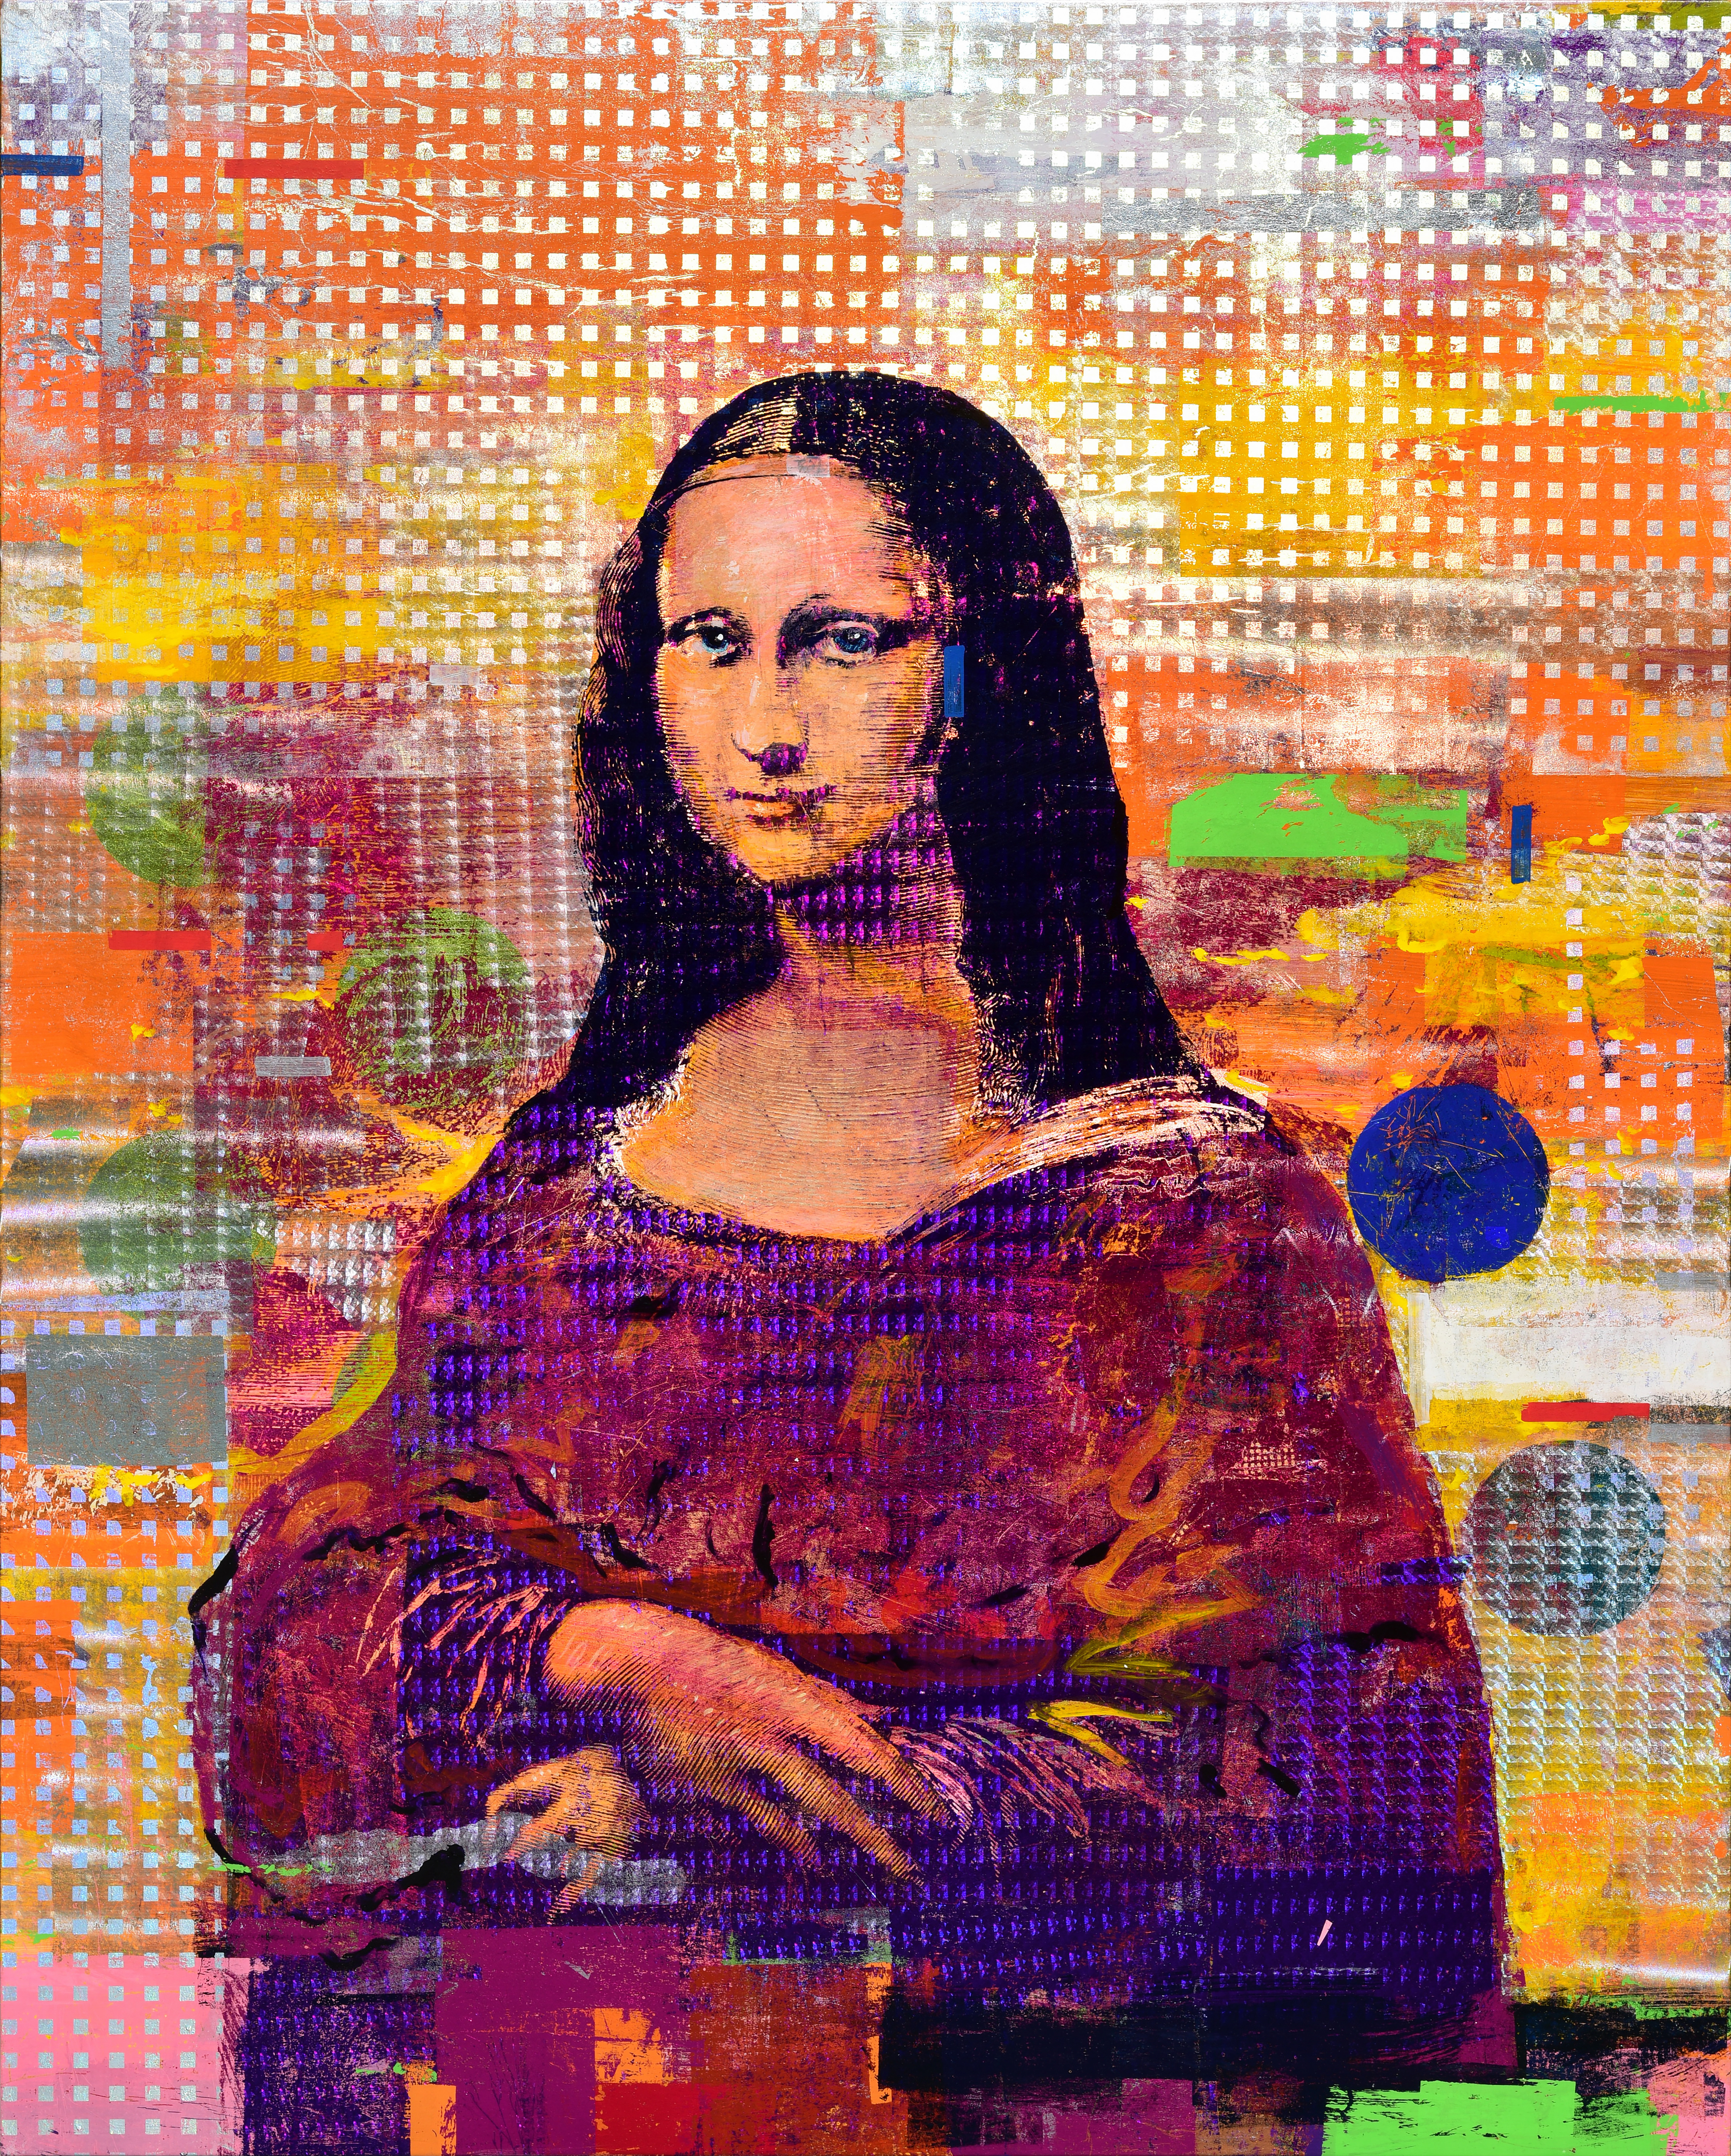 Houben Tcherkelov Mona Lisa 2018 複合媒材 152.3x121.8cm